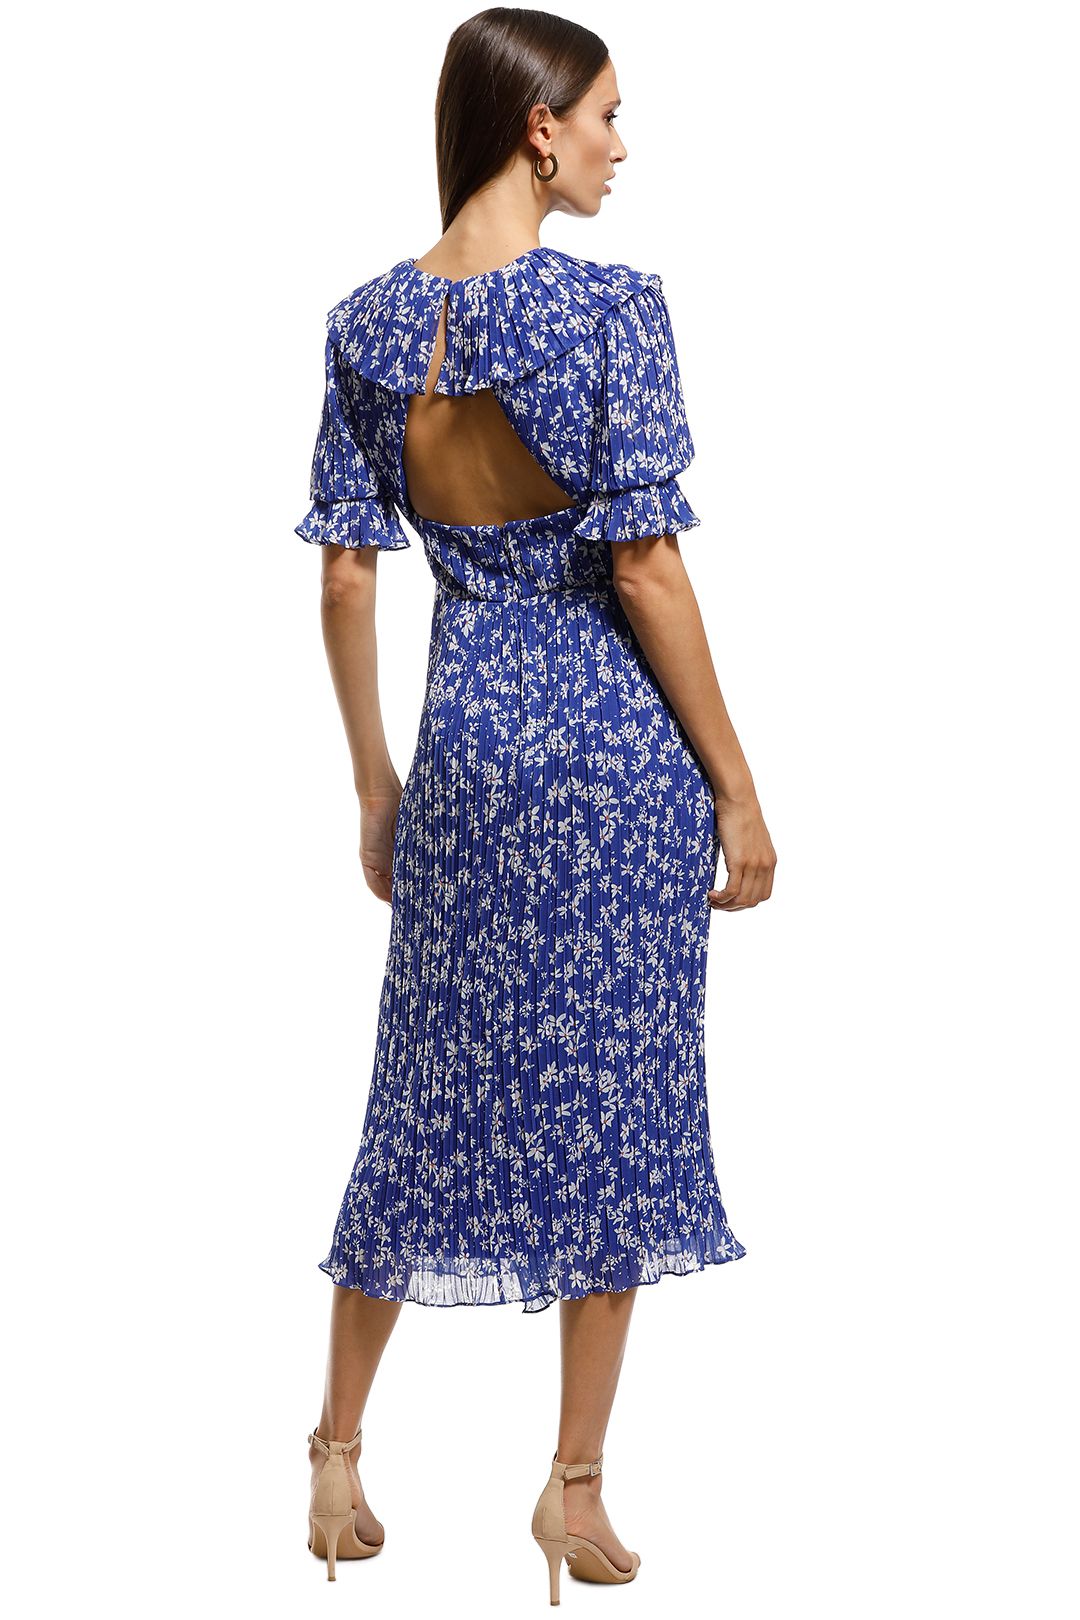 Talulah - Mediterranean Minx Midi Dress - Blue Floral - Back